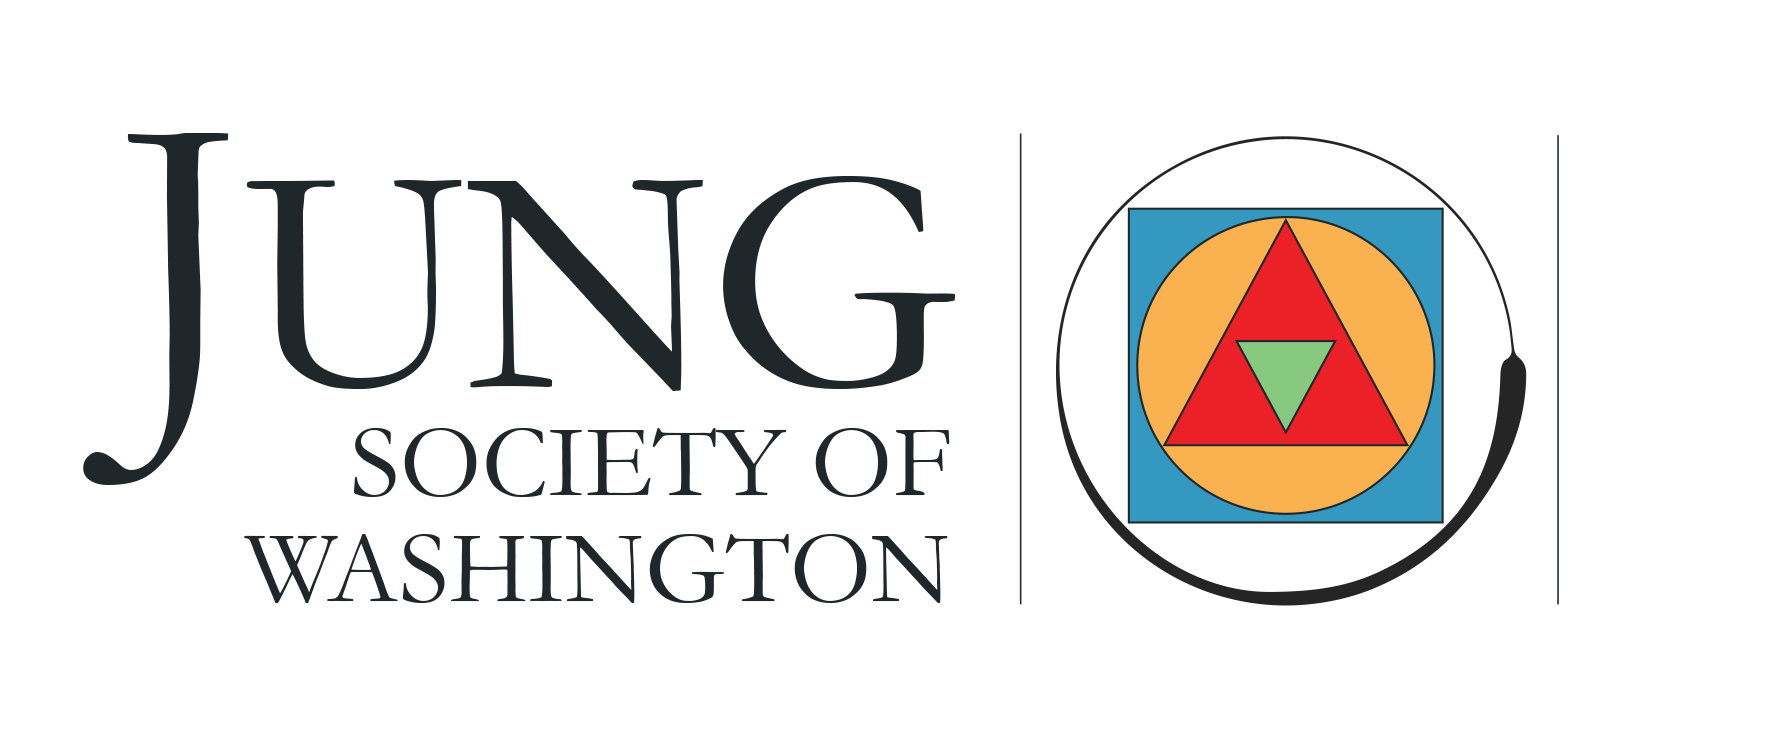 Carl Gustav Jung - Jungian Analysts of Washington Association